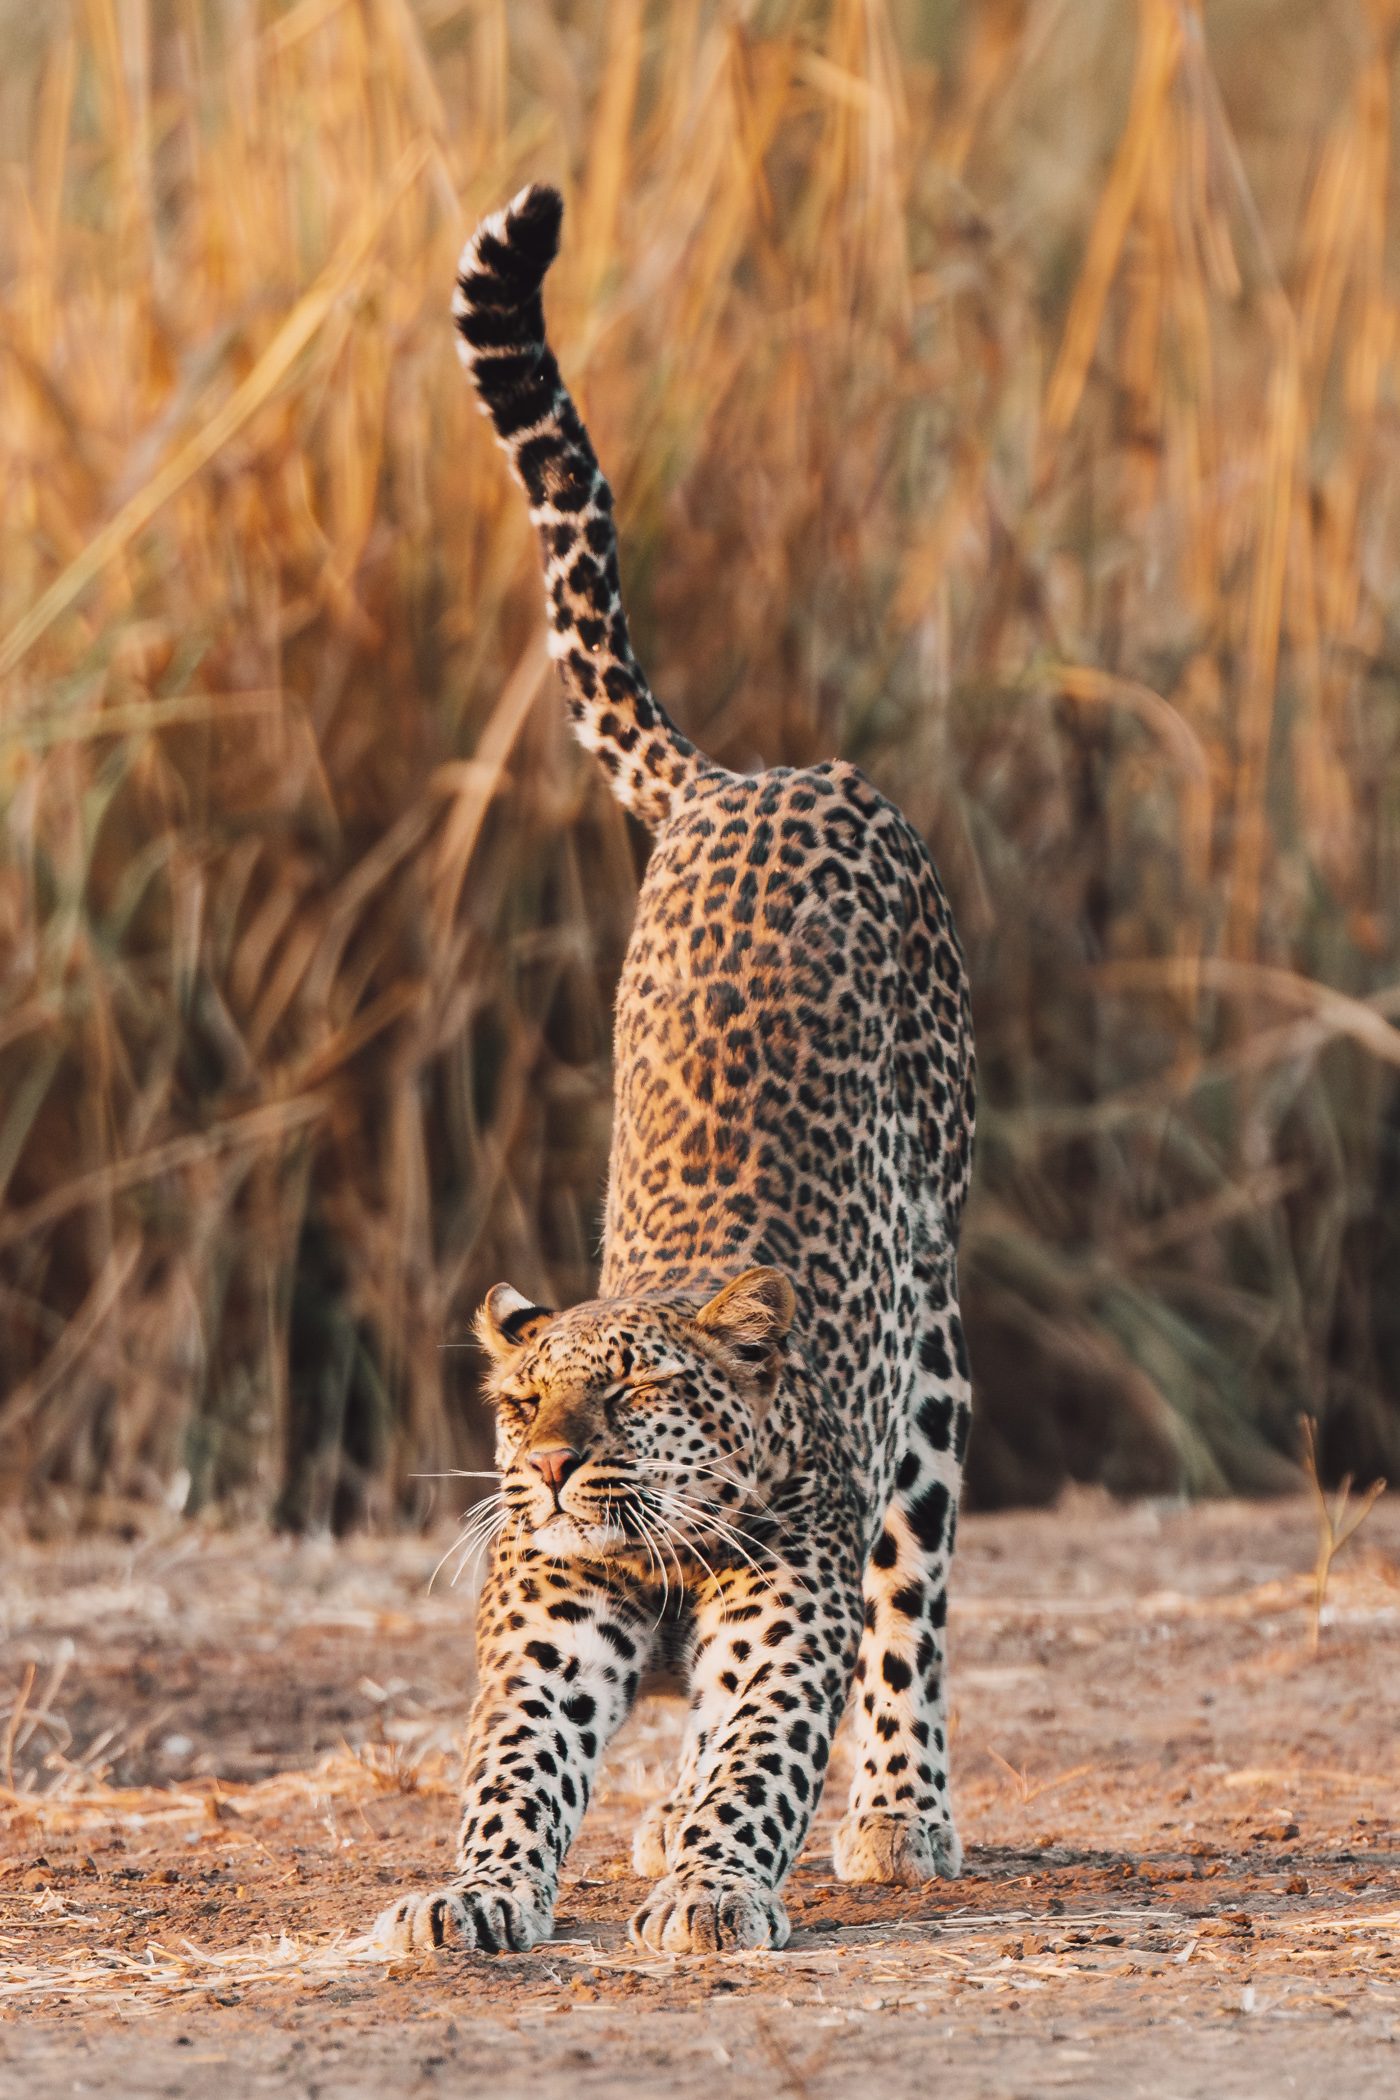 Leopard stretching in Lower Zambezi National Park in Zambia